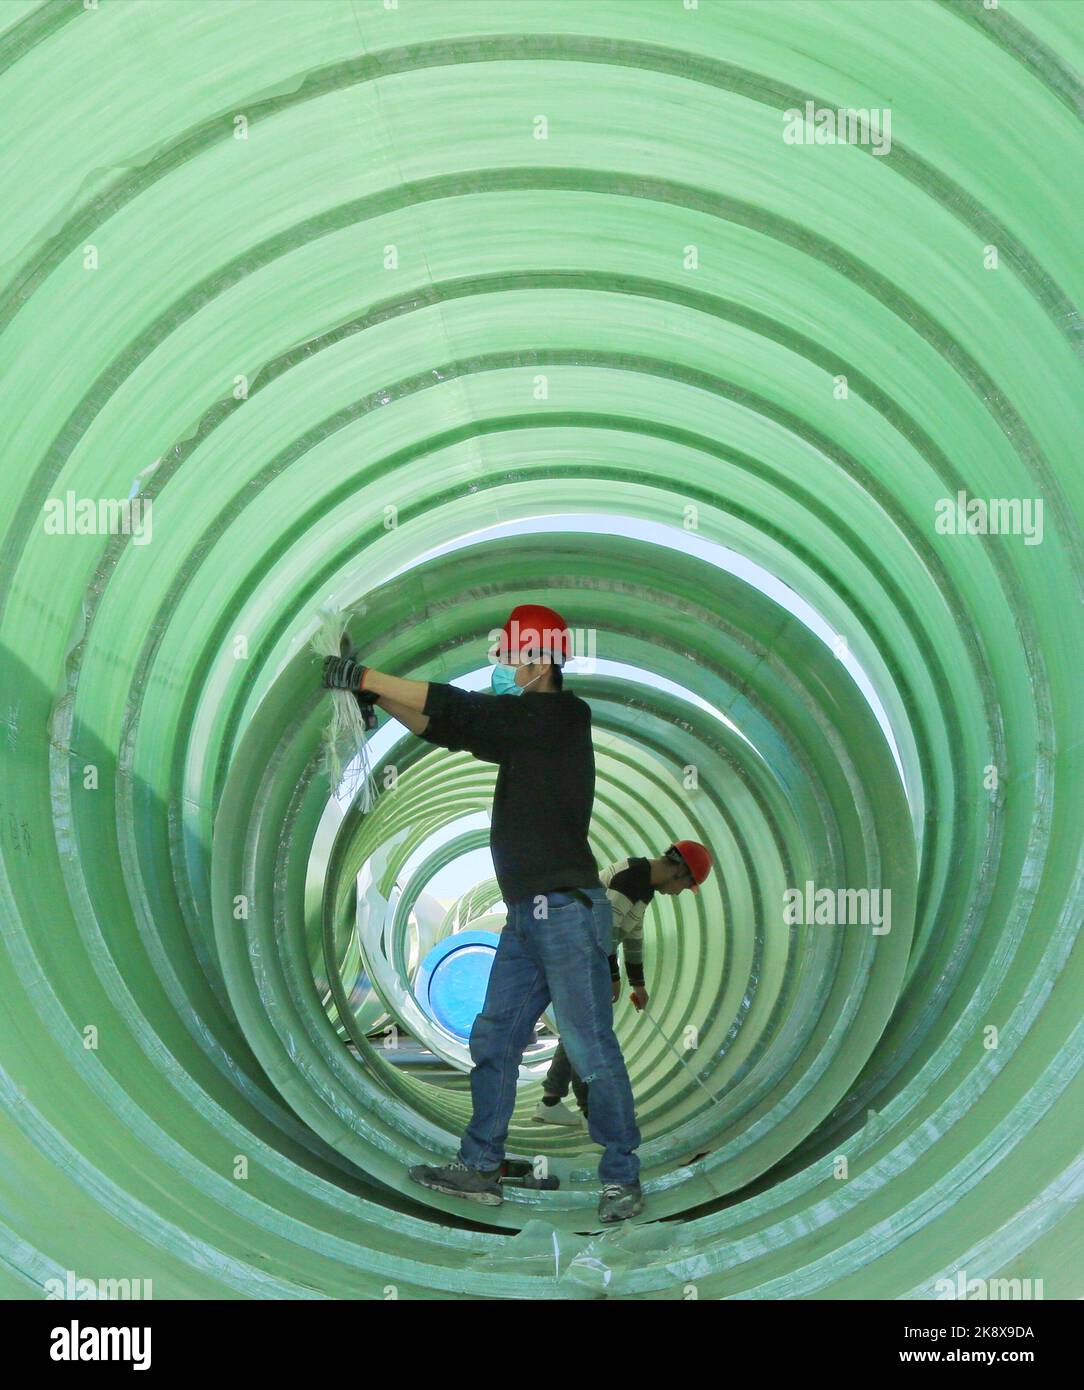 NANTONG, CHINA - OCTOBER 24, 2022 - A worker cleans inside a fiberglass sewage treatment facility in Nantong city, Jiangsu province, China, Oct 24, 20 Stock Photo